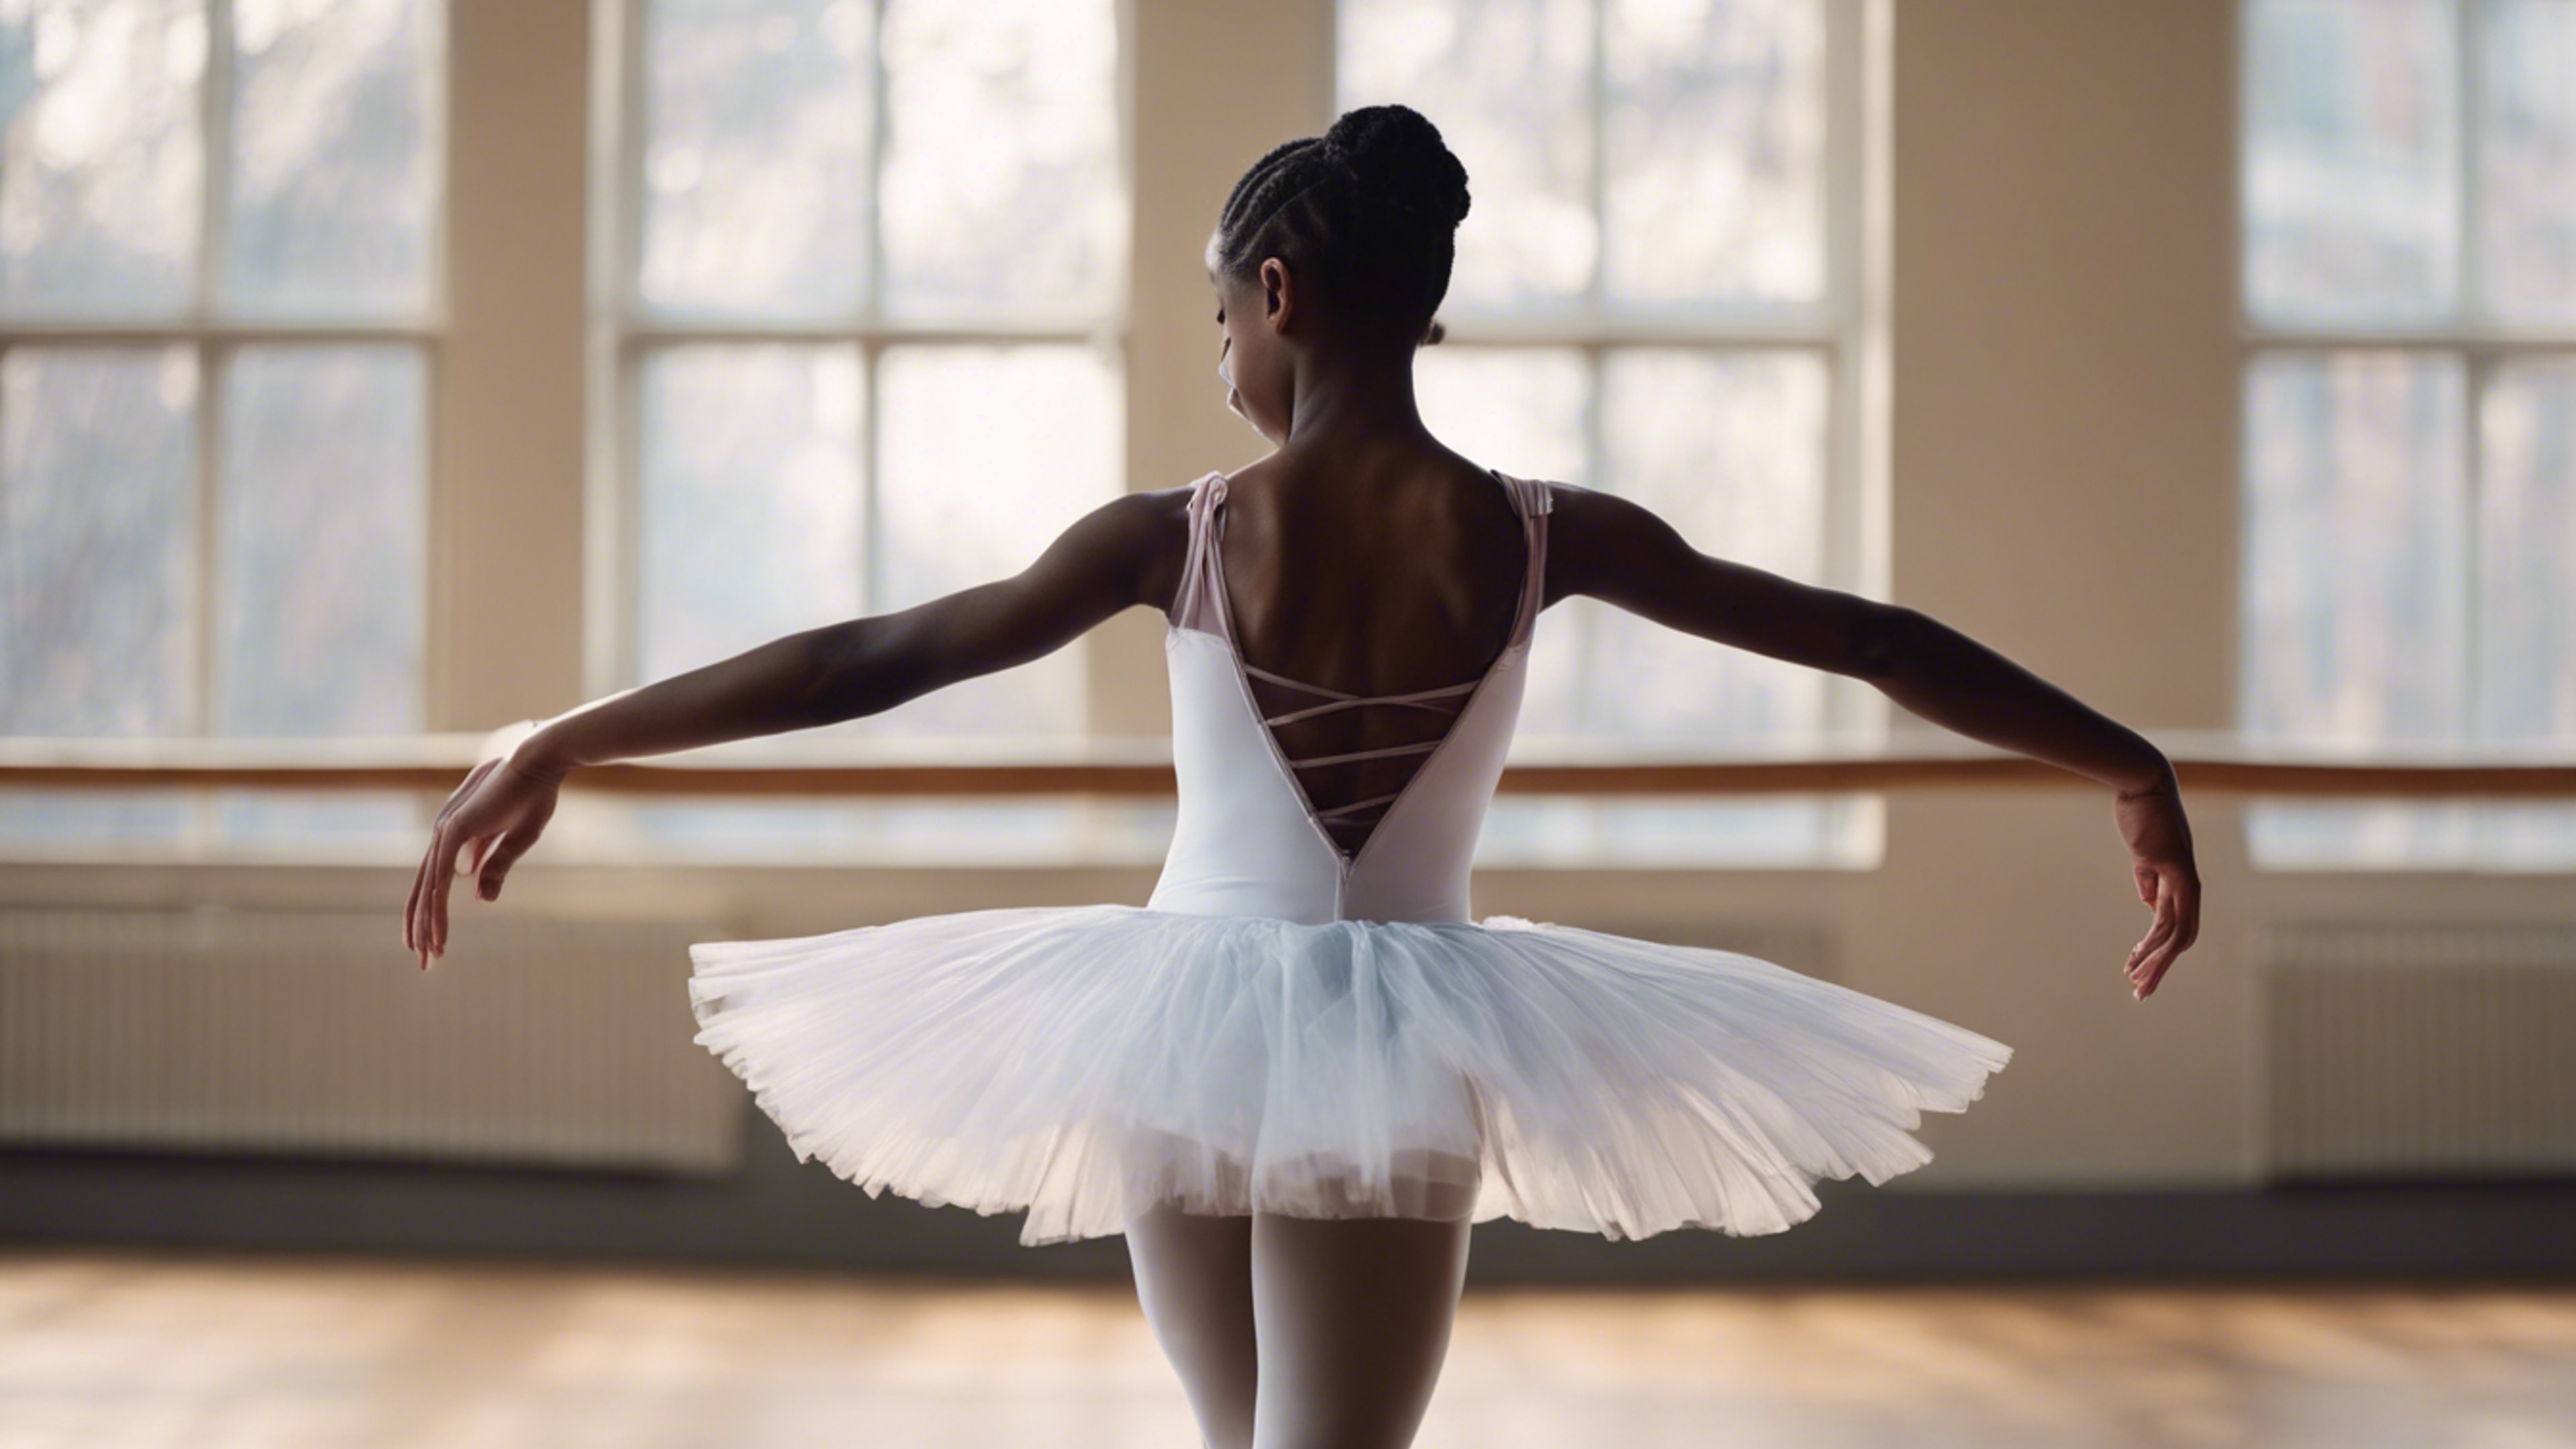 A young black girl practicing ballet in a beautiful satin tutu. Papel de parede[c9fc18550cde4bfca1b8]